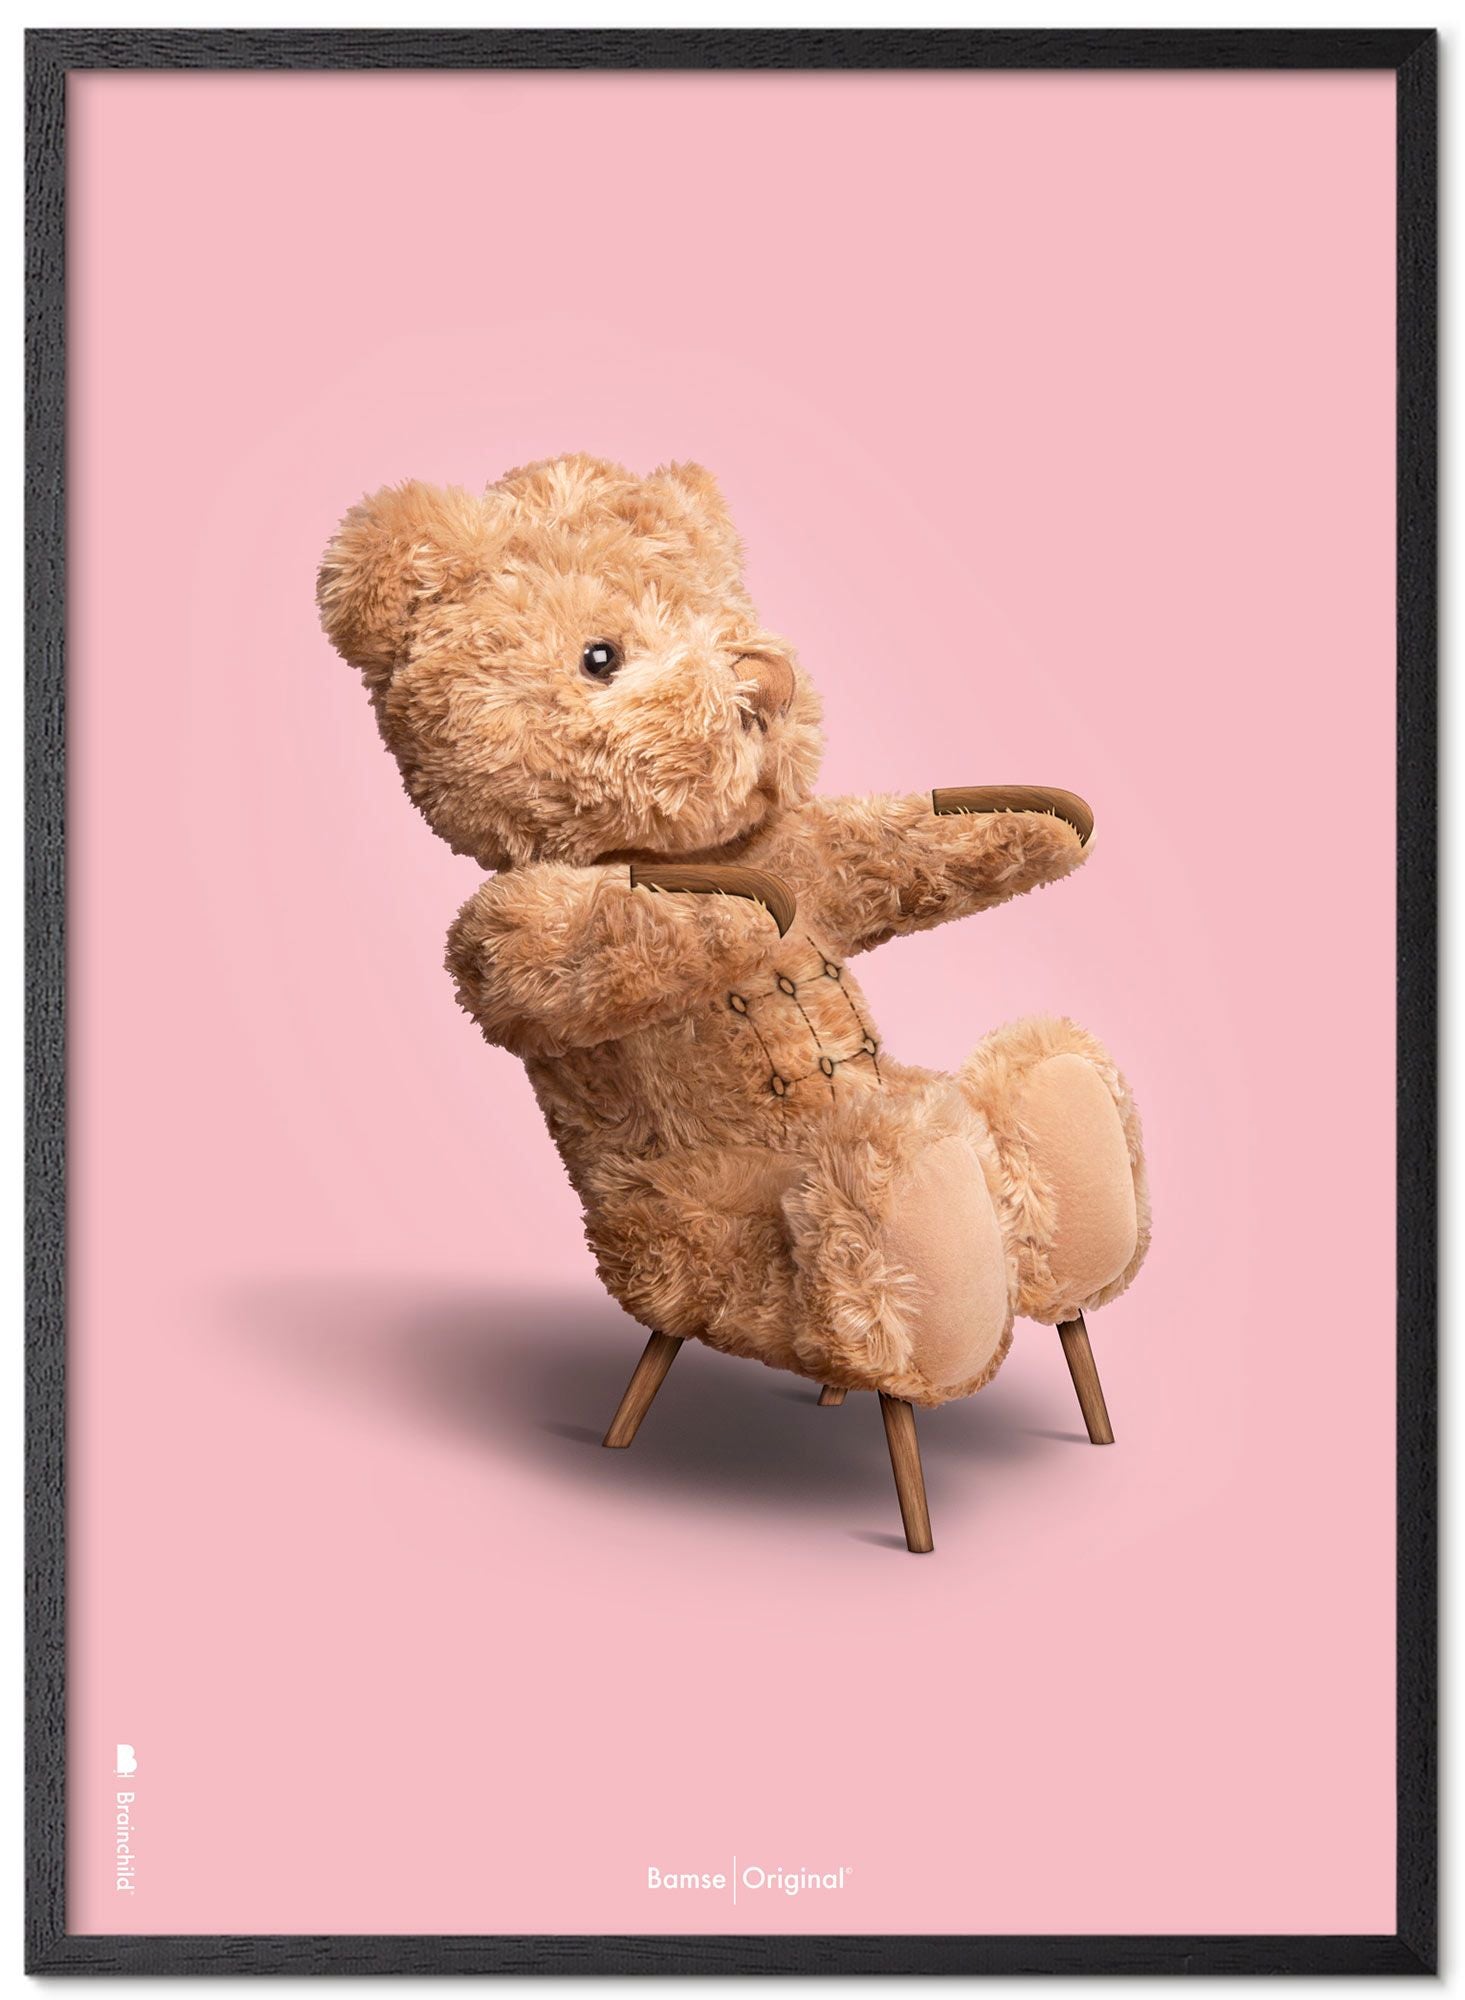 Brainchild Teddybeer klassiek poster frame gemaakt van zwart gelakte hout 50x70 cm, roze achtergrond